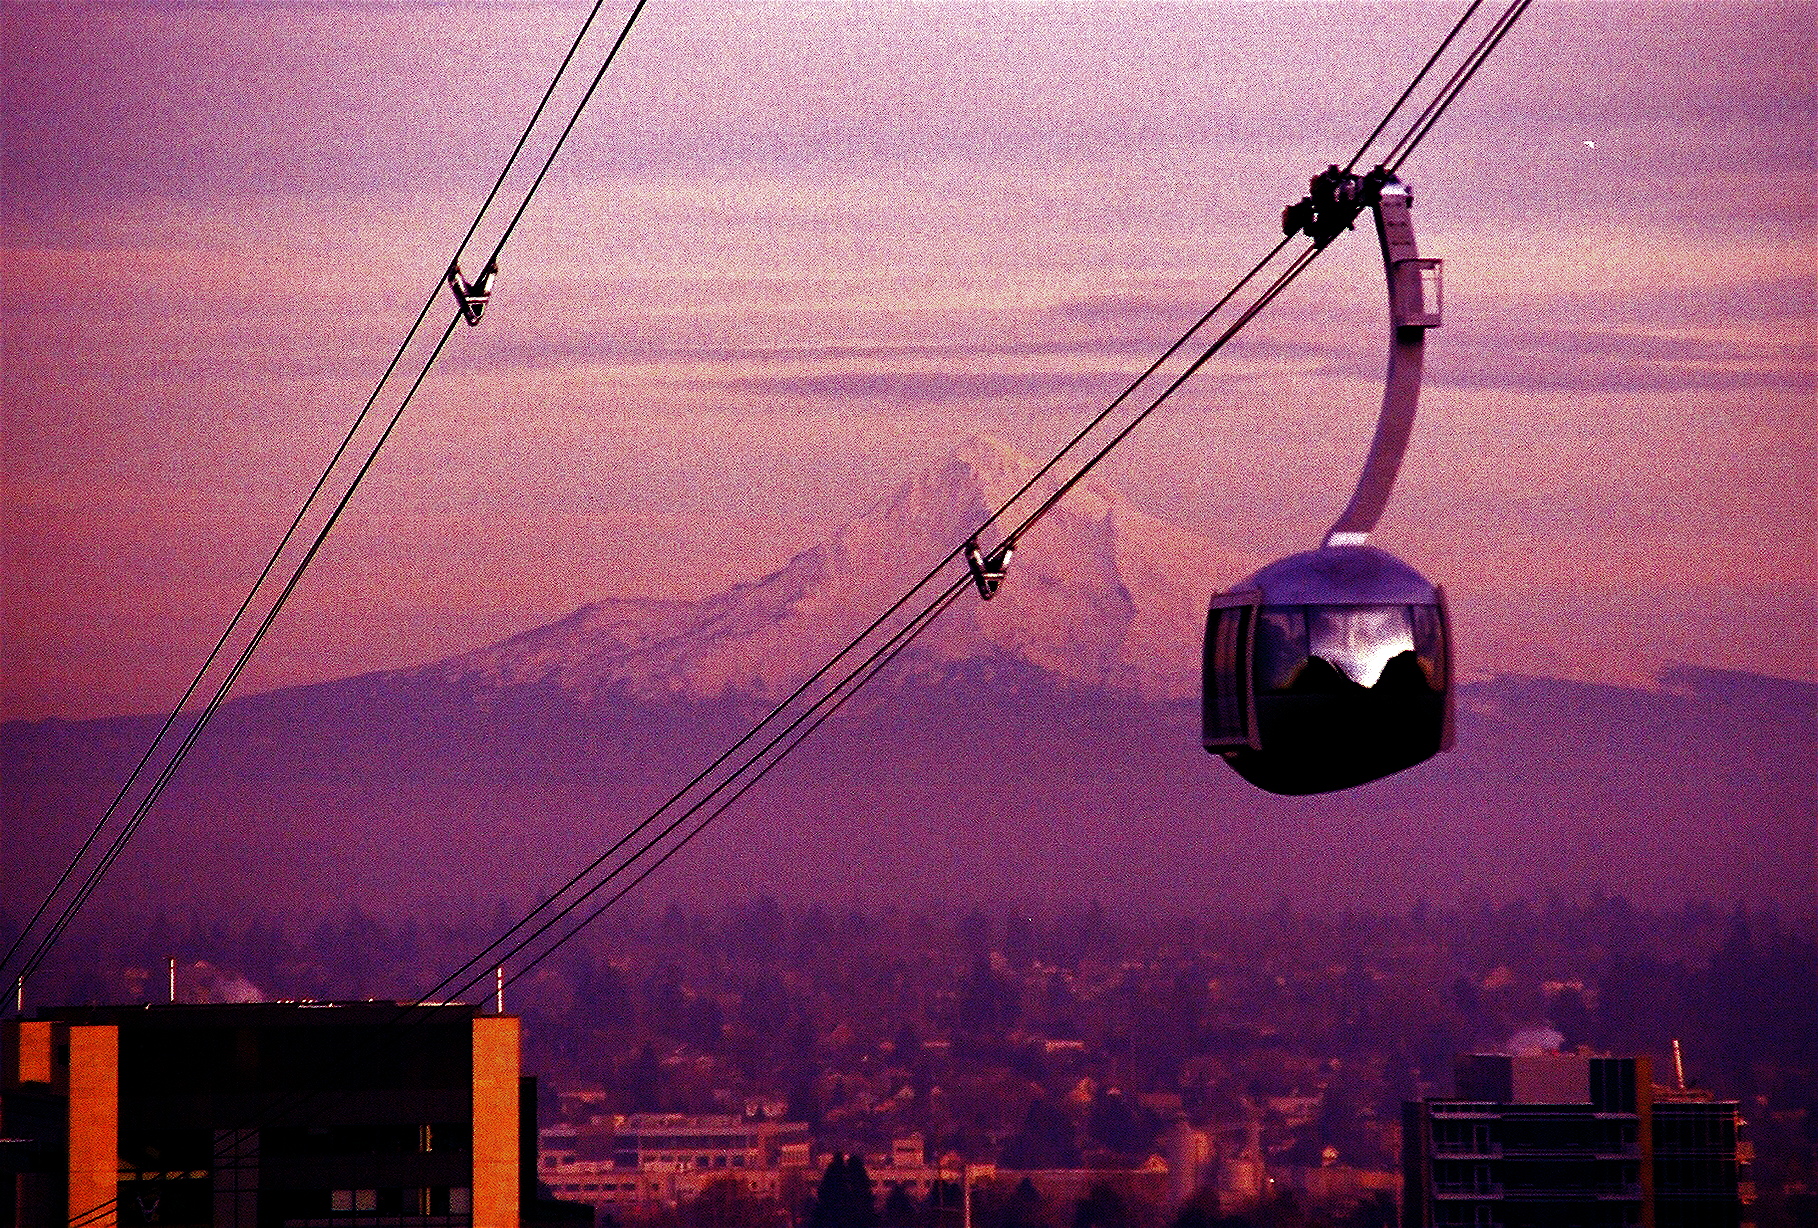 Portland Aerial Tram: Enjoy Stunning Views of the Rose City